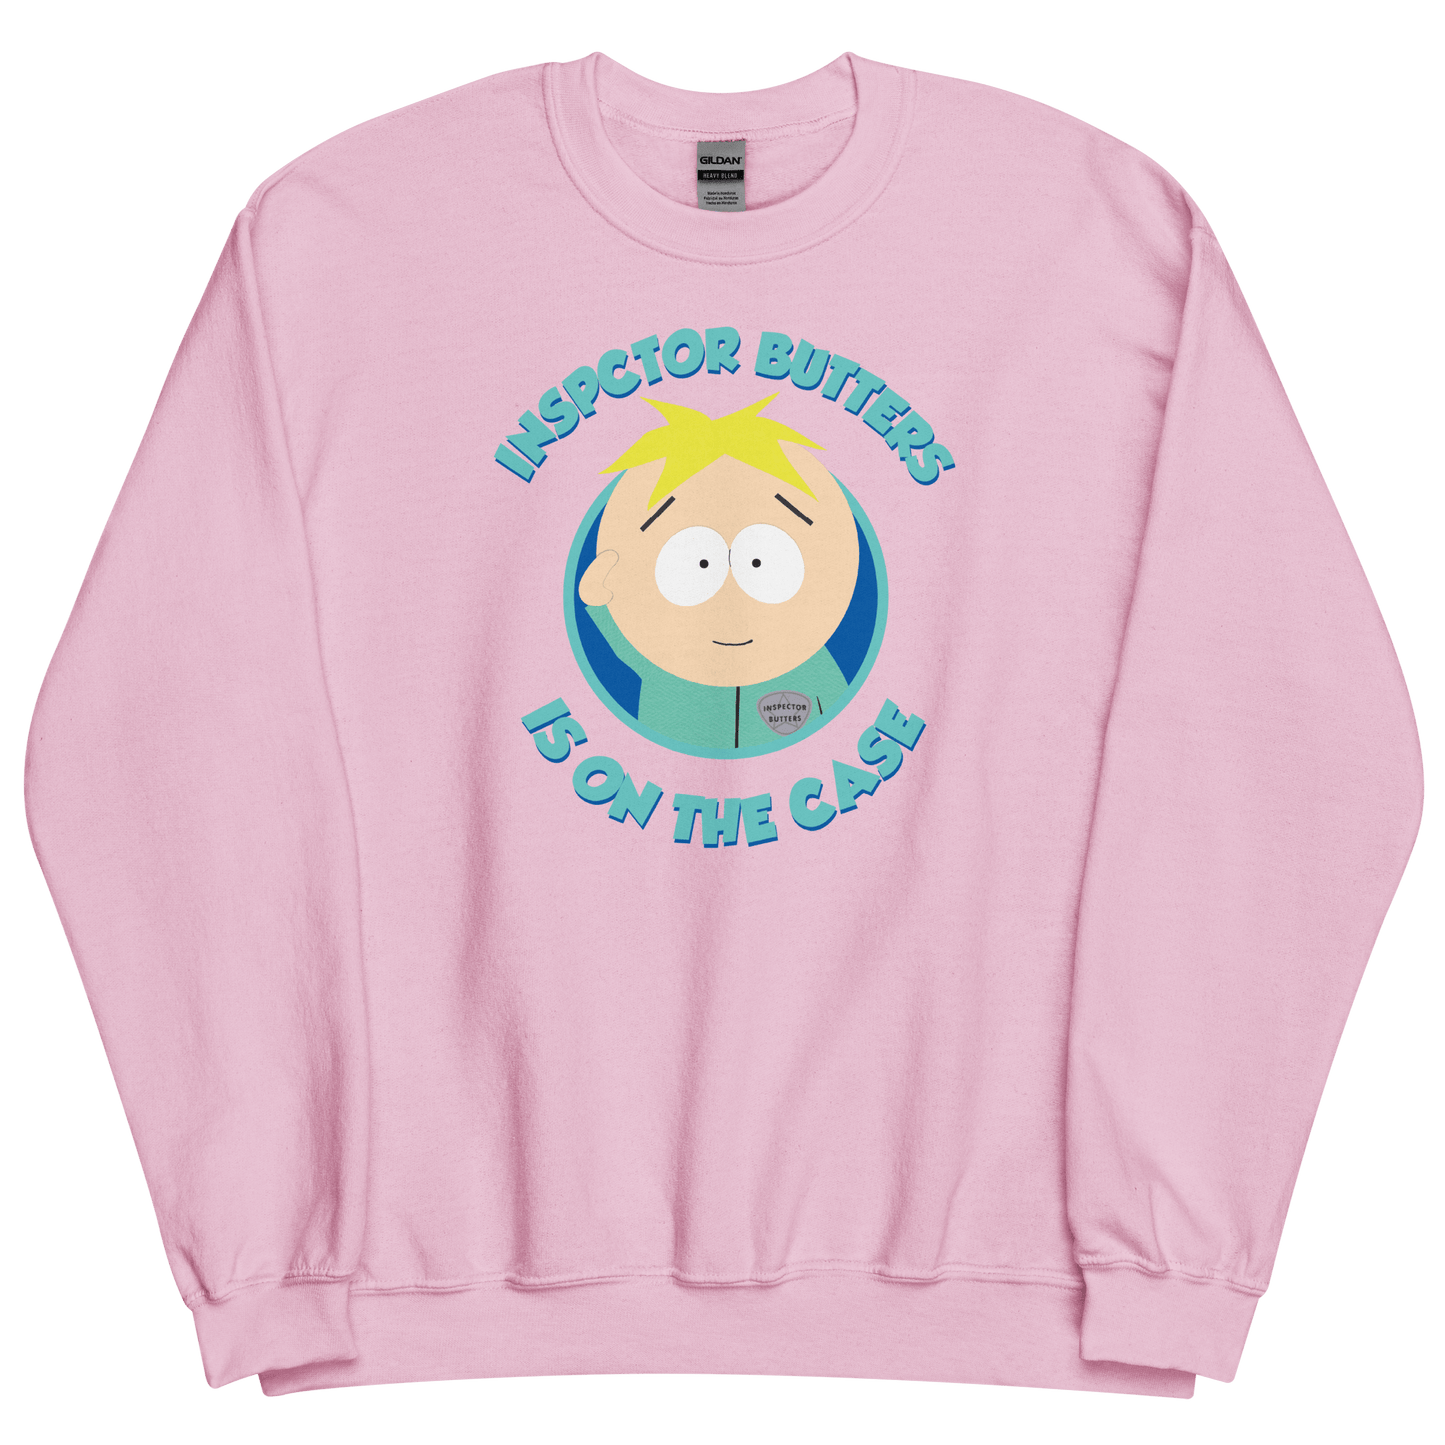 South Park Inspector Butters Is On The Case Fleece Crewneck Sweatshirt - Paramount Shop